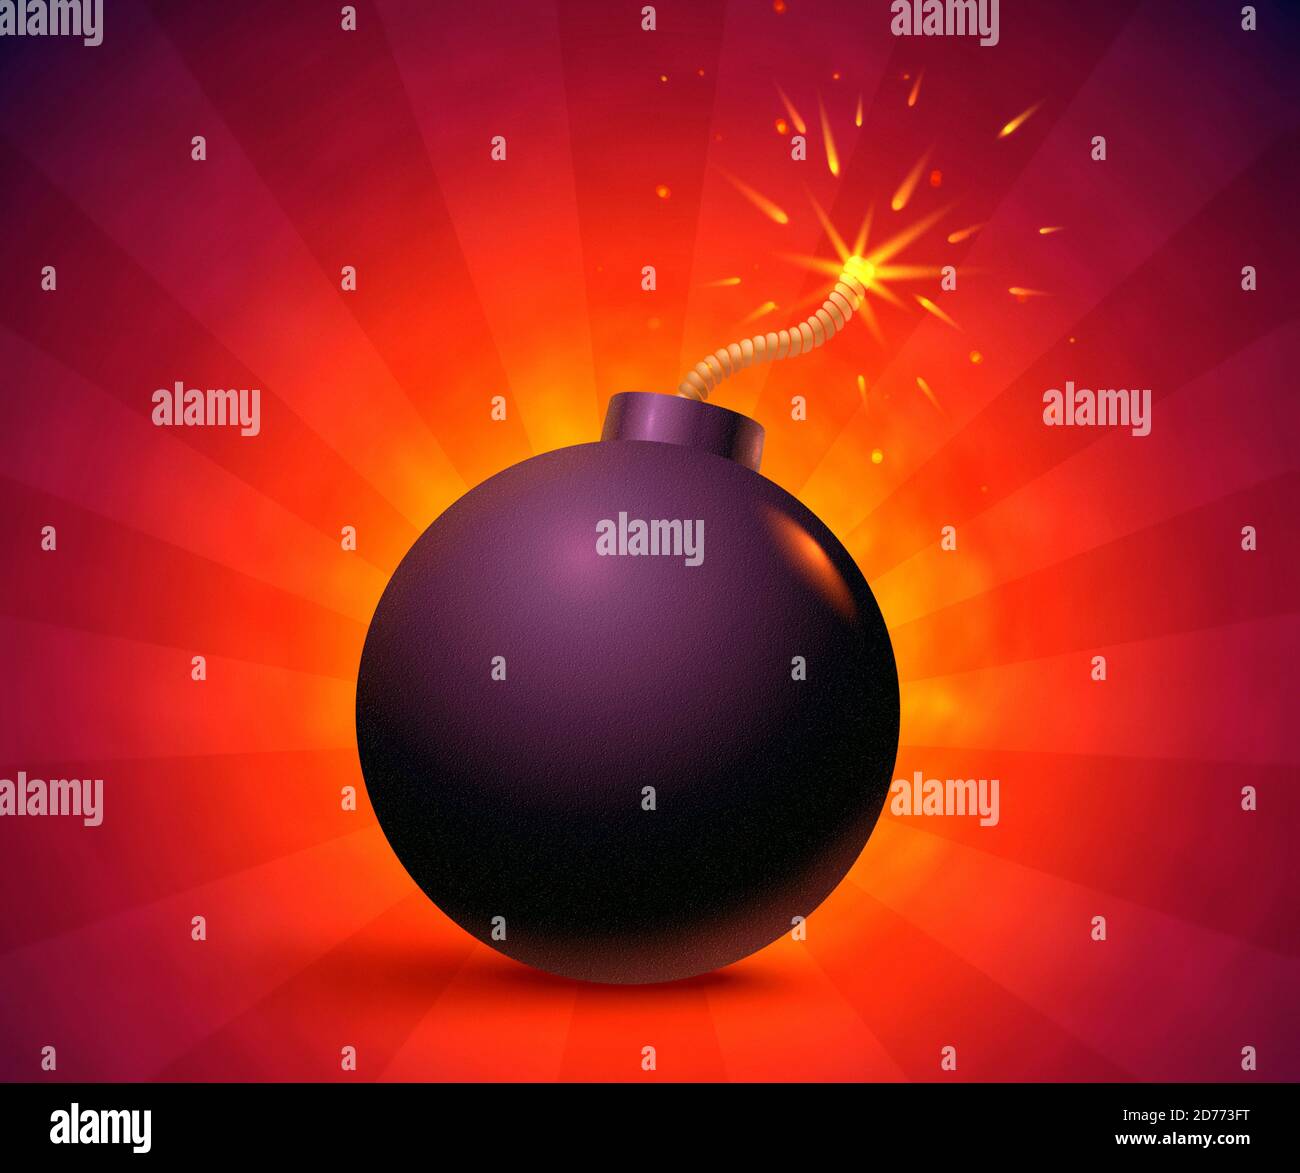 Illustration of a bomb with sparks. Black bomb on orange background. Stock Photo